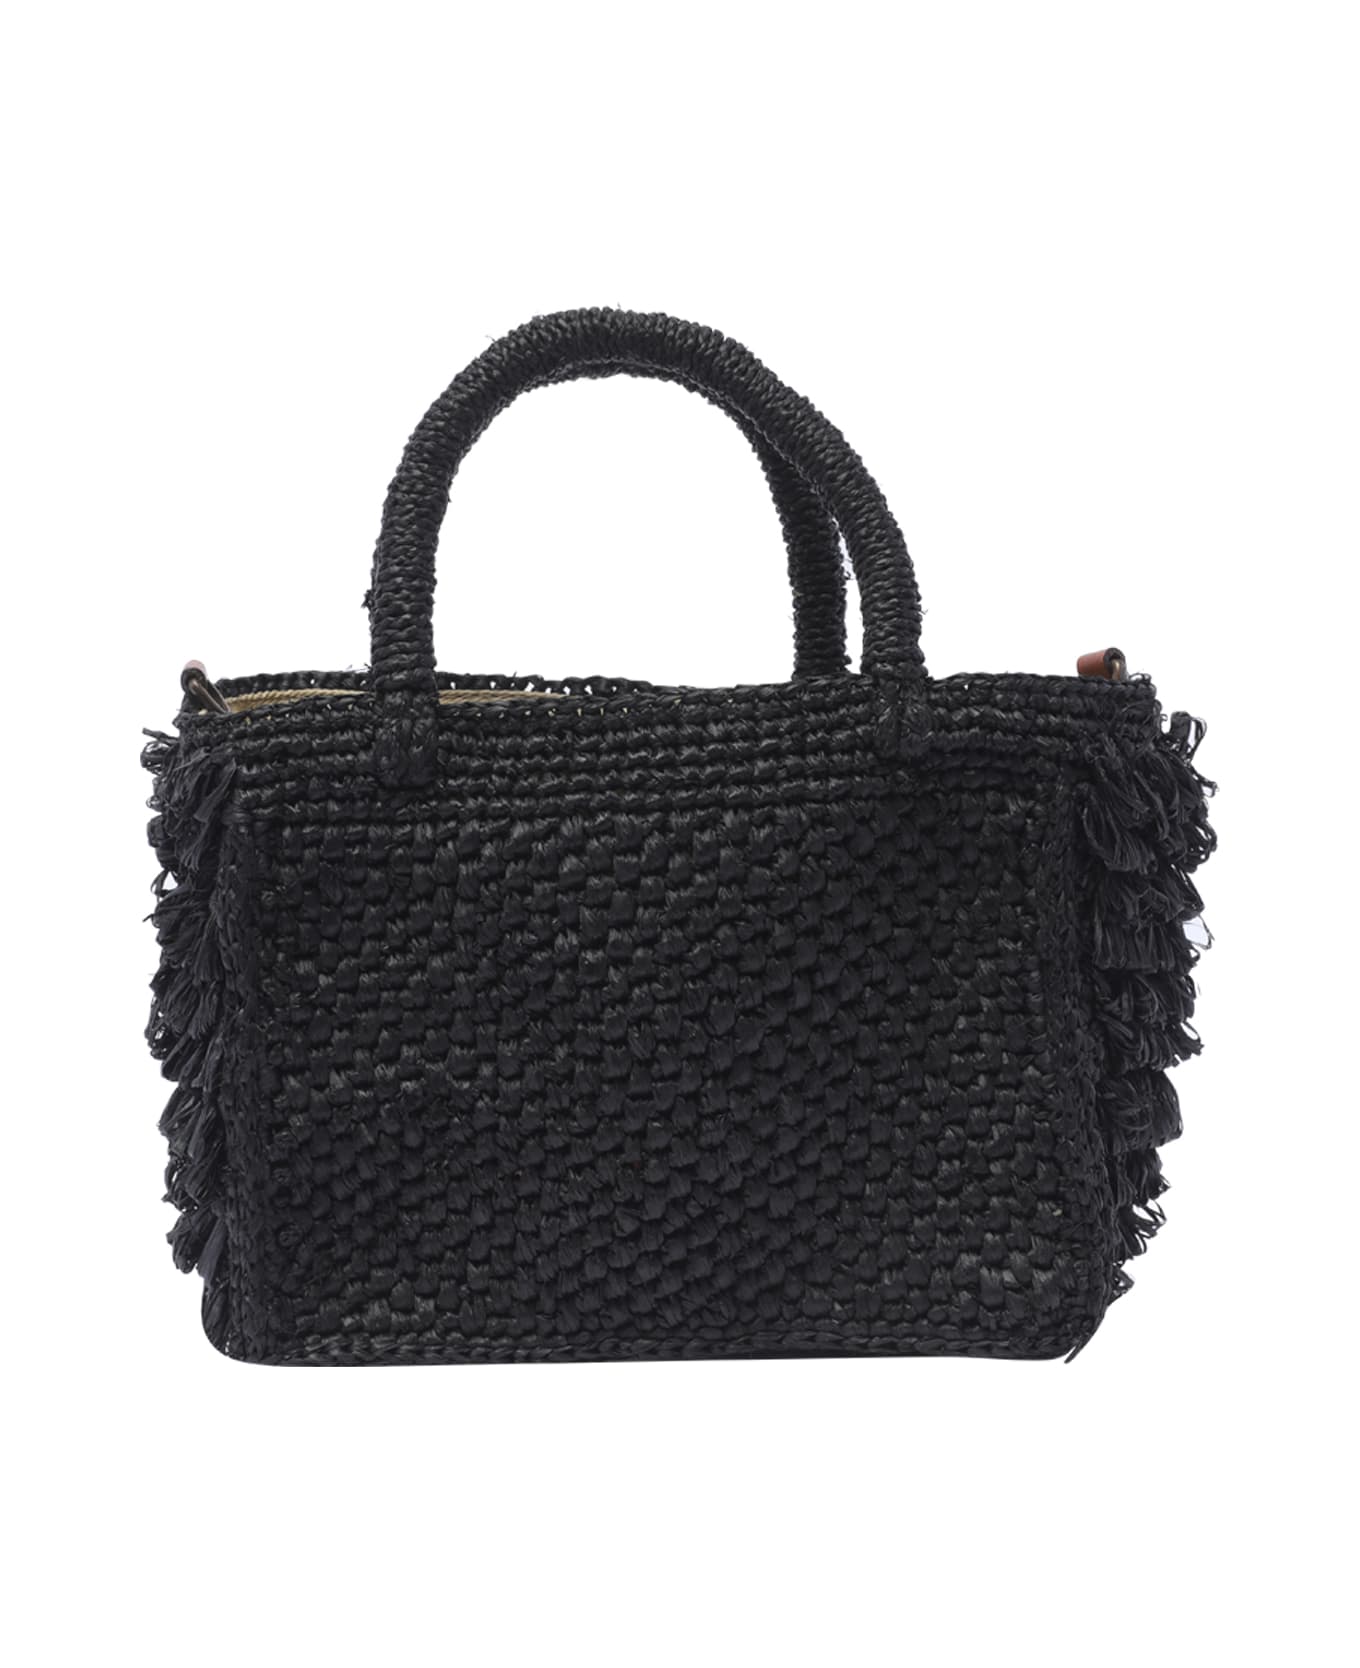 Ibeliv Cocktail Handbag - Black